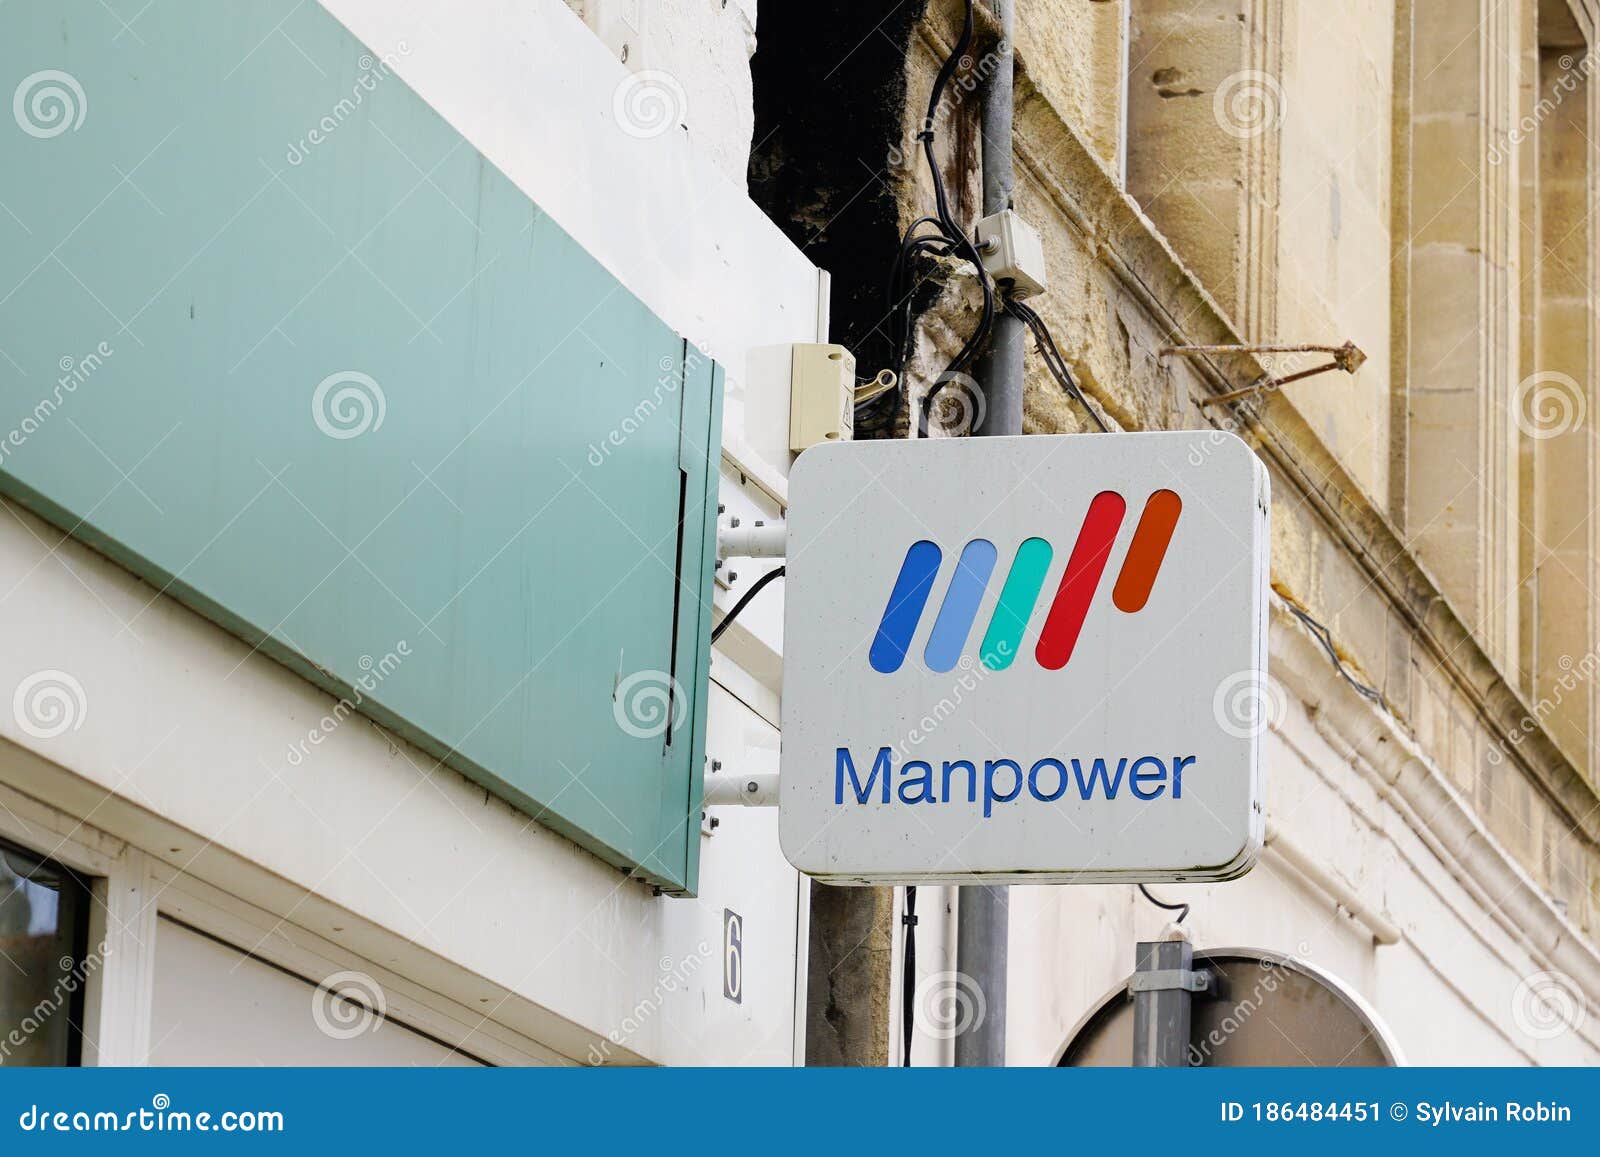 manpower staffing agency